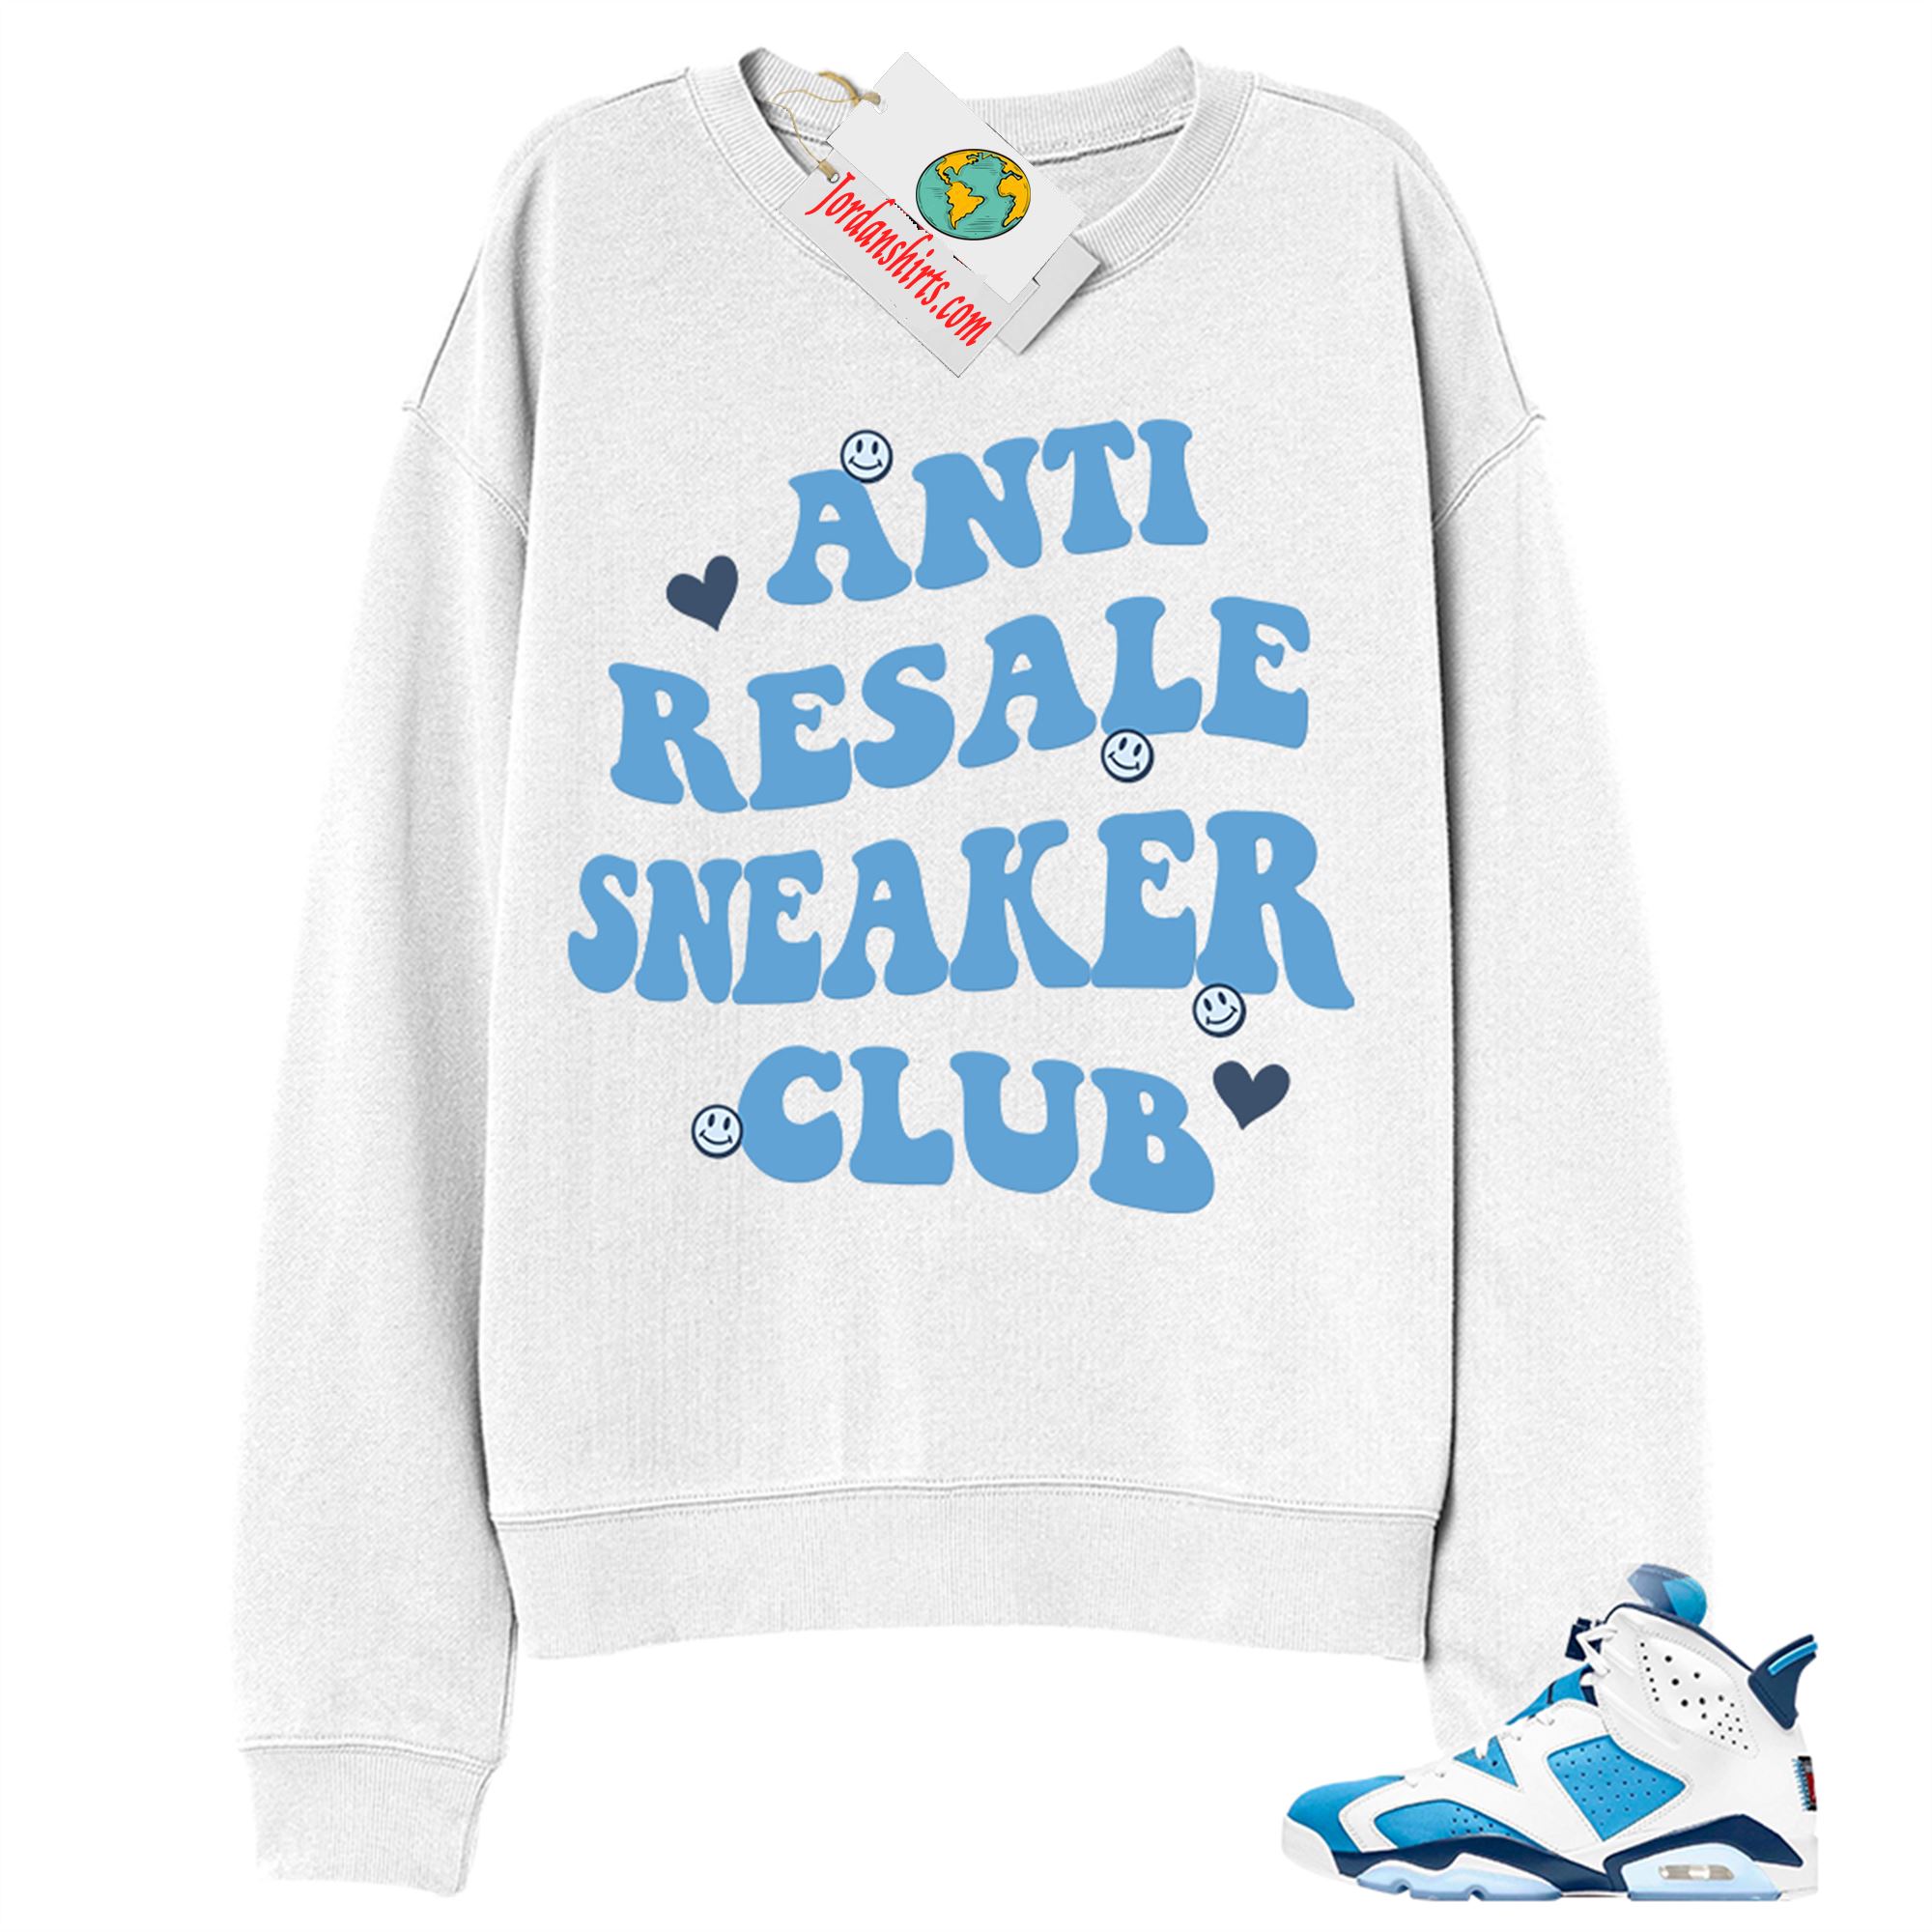 Jordan 6 Sweatshirt, Anti Resale Sneaker Club White Sweatshirt Air Jordan 6 Unc 6s Full Size Up To 5xl